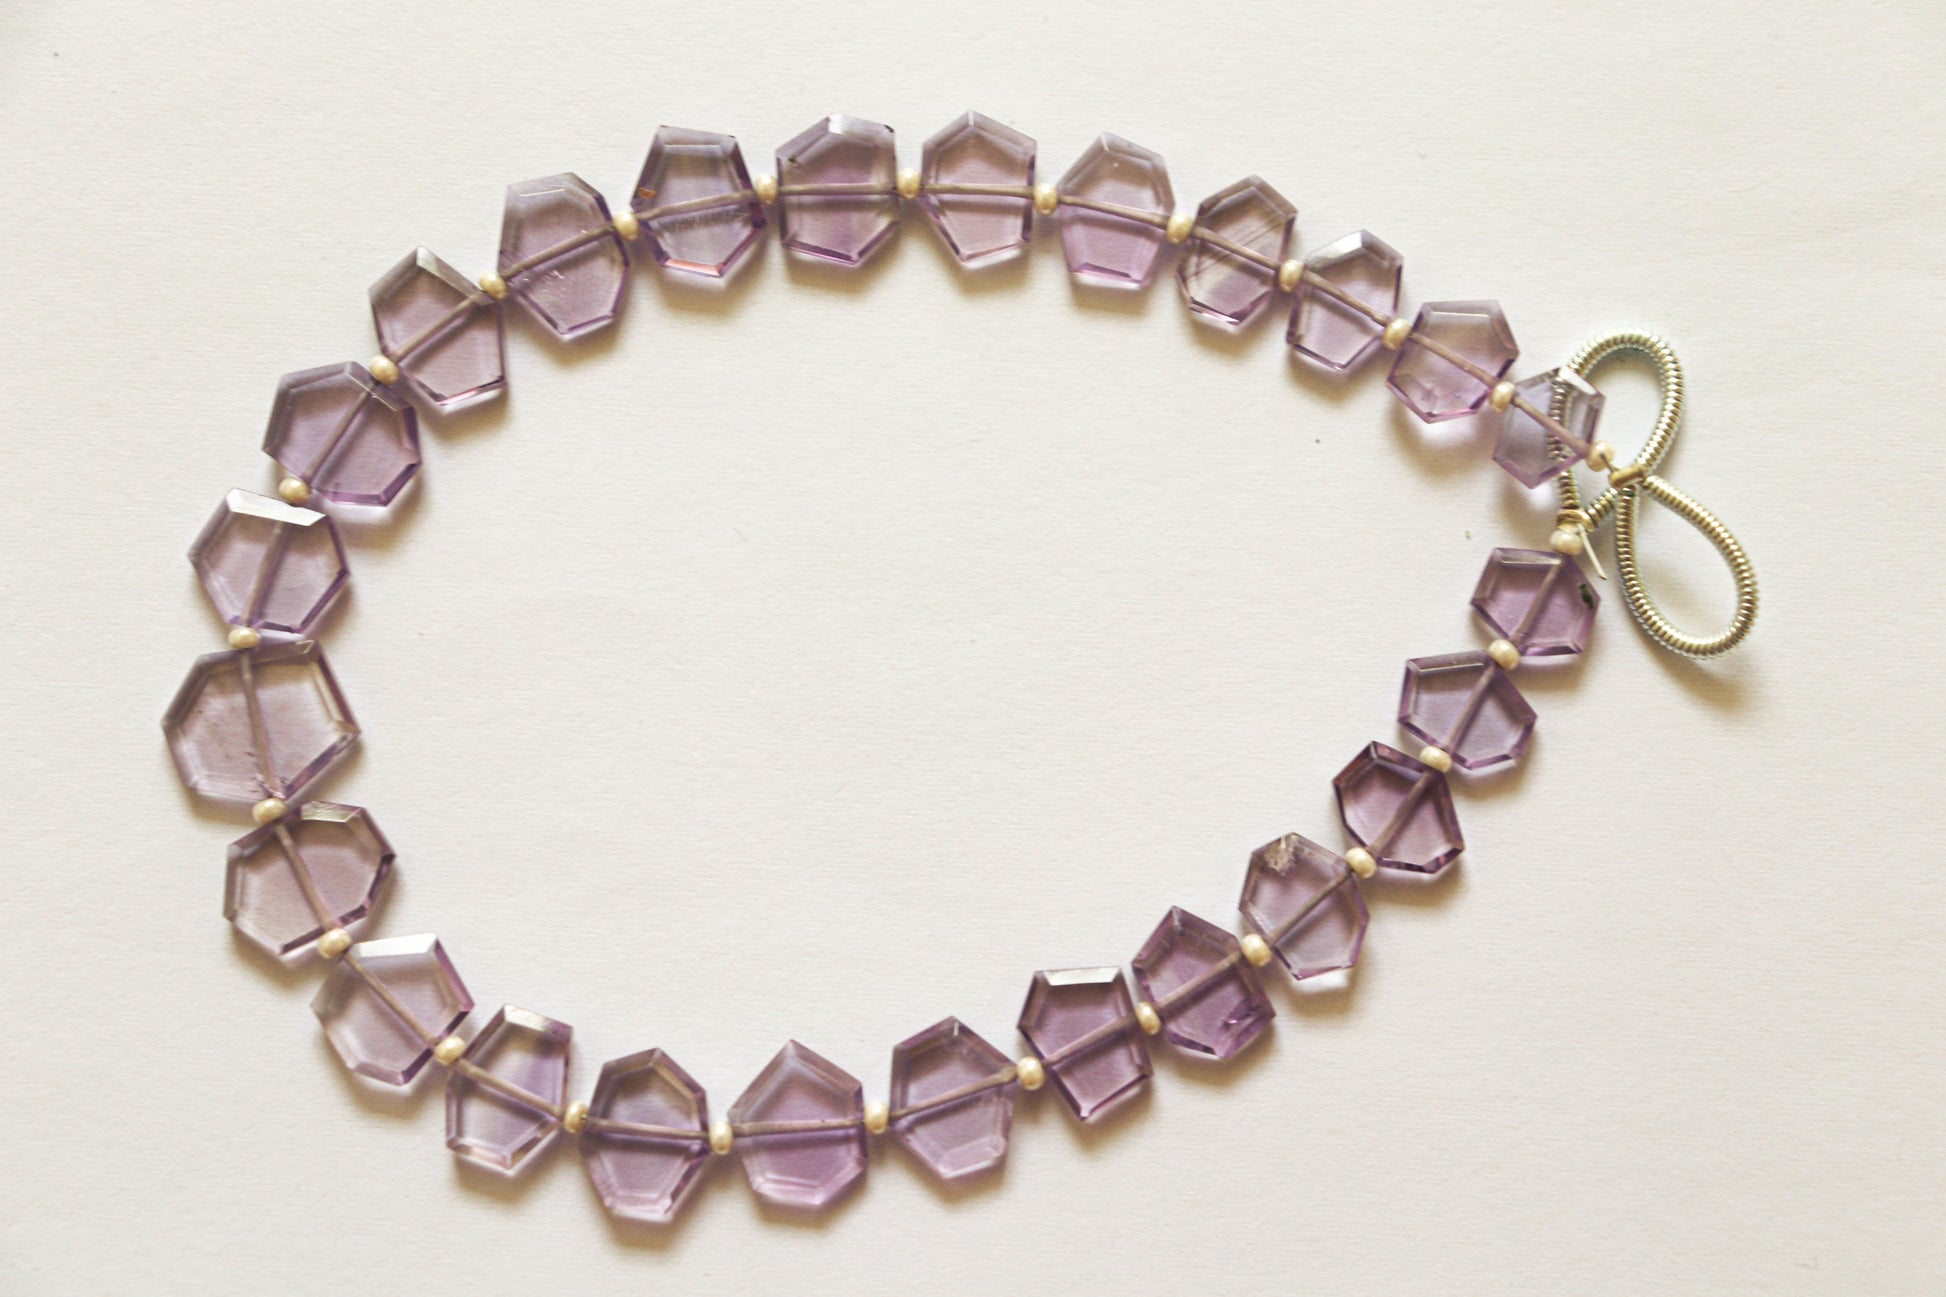 Amethyst gemstone Crown cut beads Beadsforyourjewelry